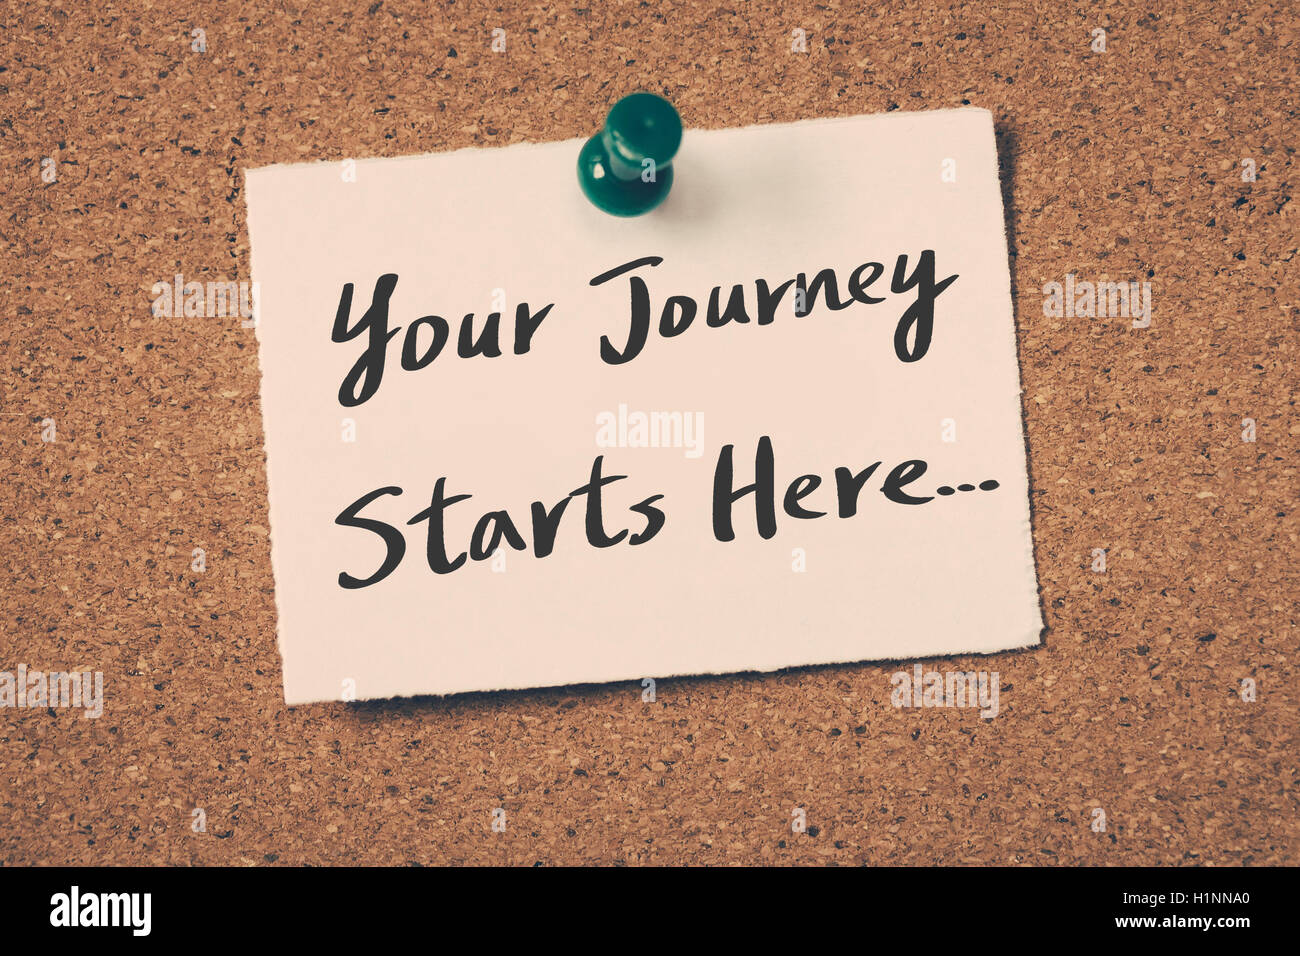 Start a journey. Путешествие начинается здесь. The Journey starts here. Start your Journey.